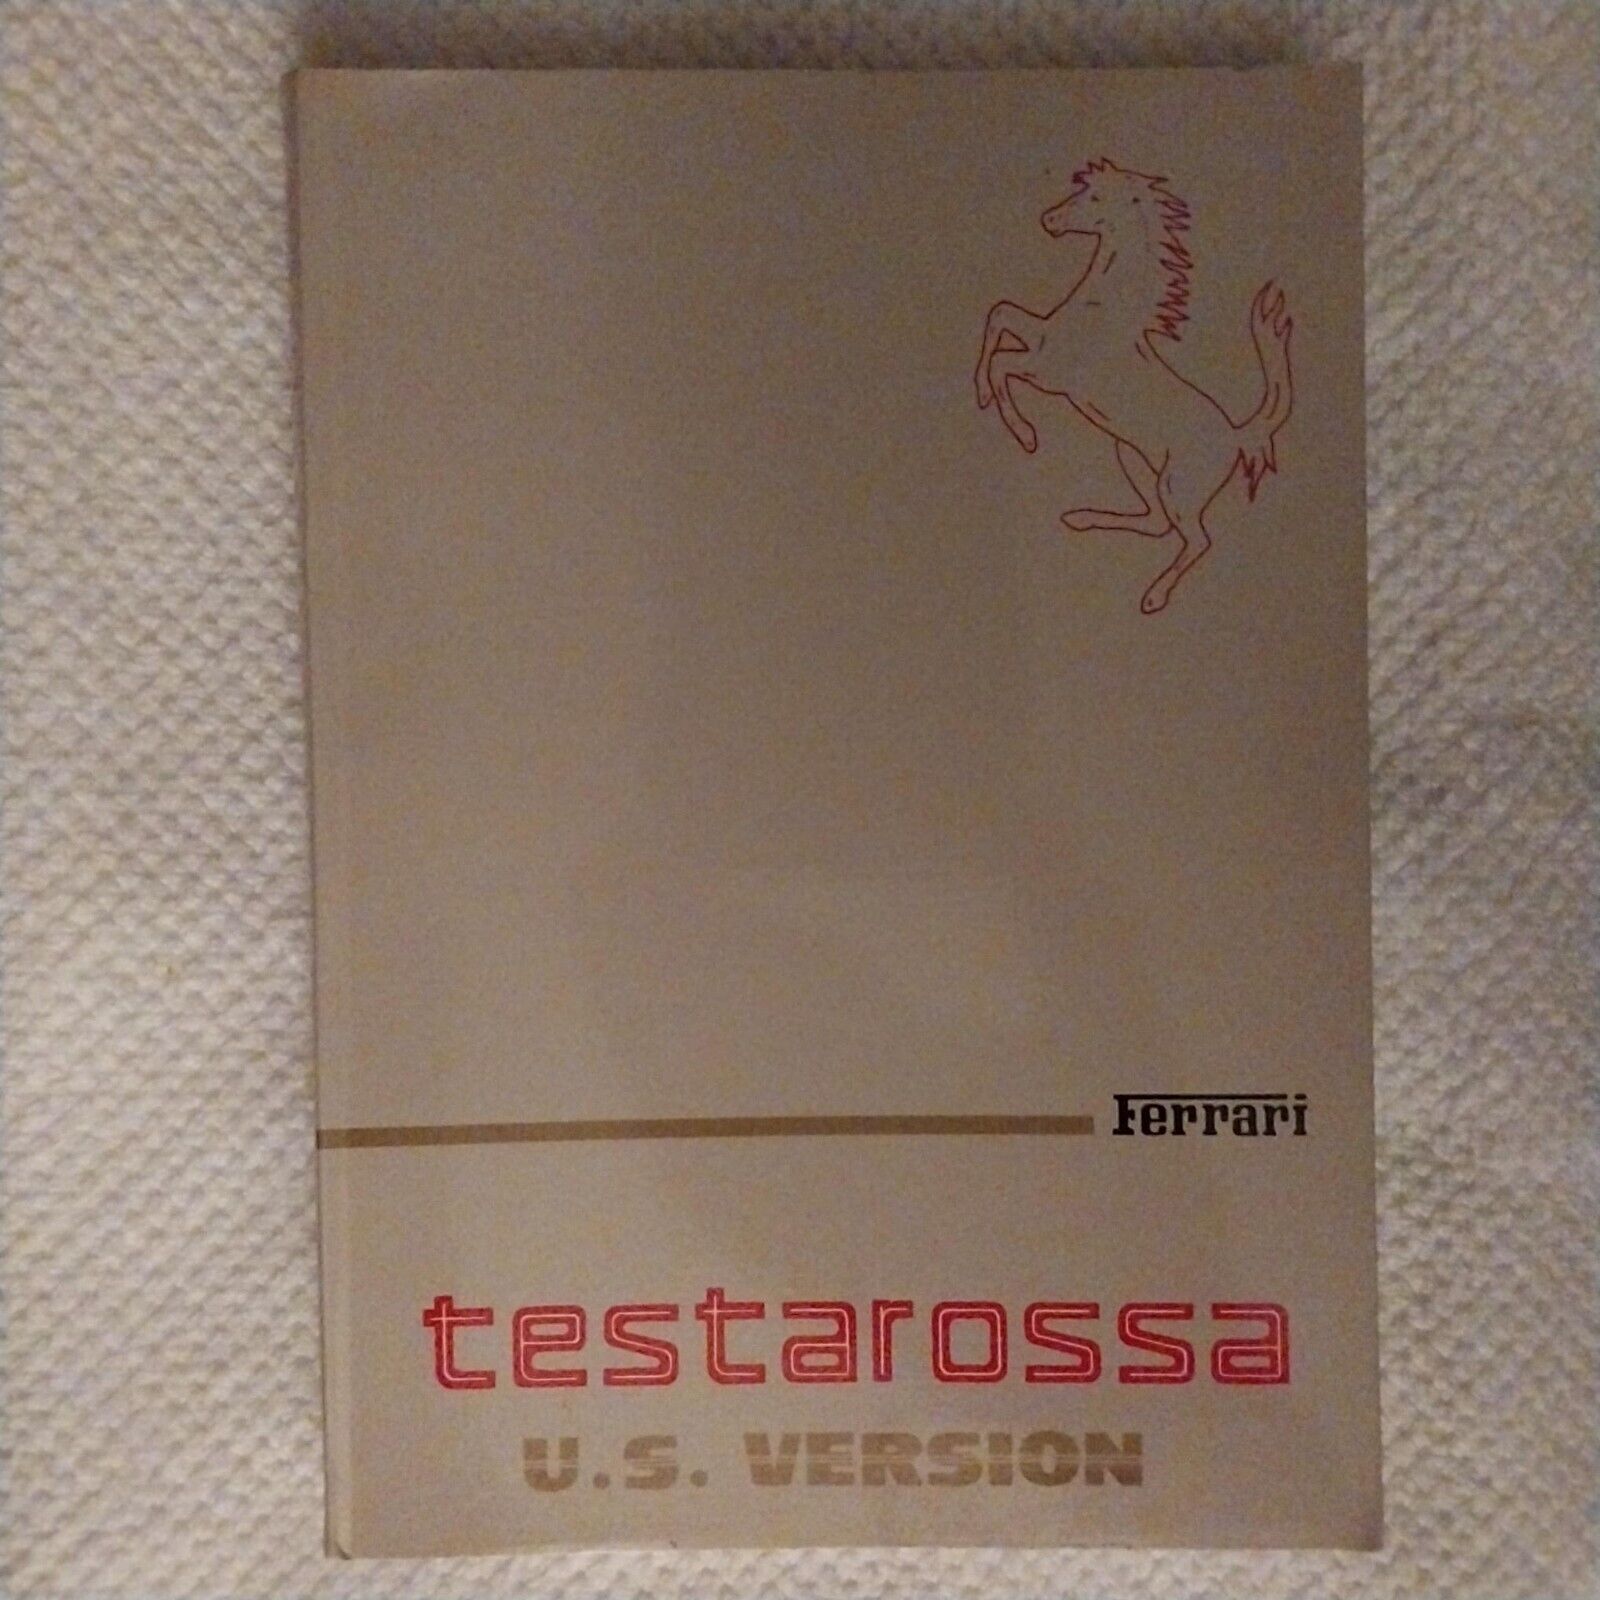 1985/1986 Ferrari Testarossa Owners Manual US Version 348-85